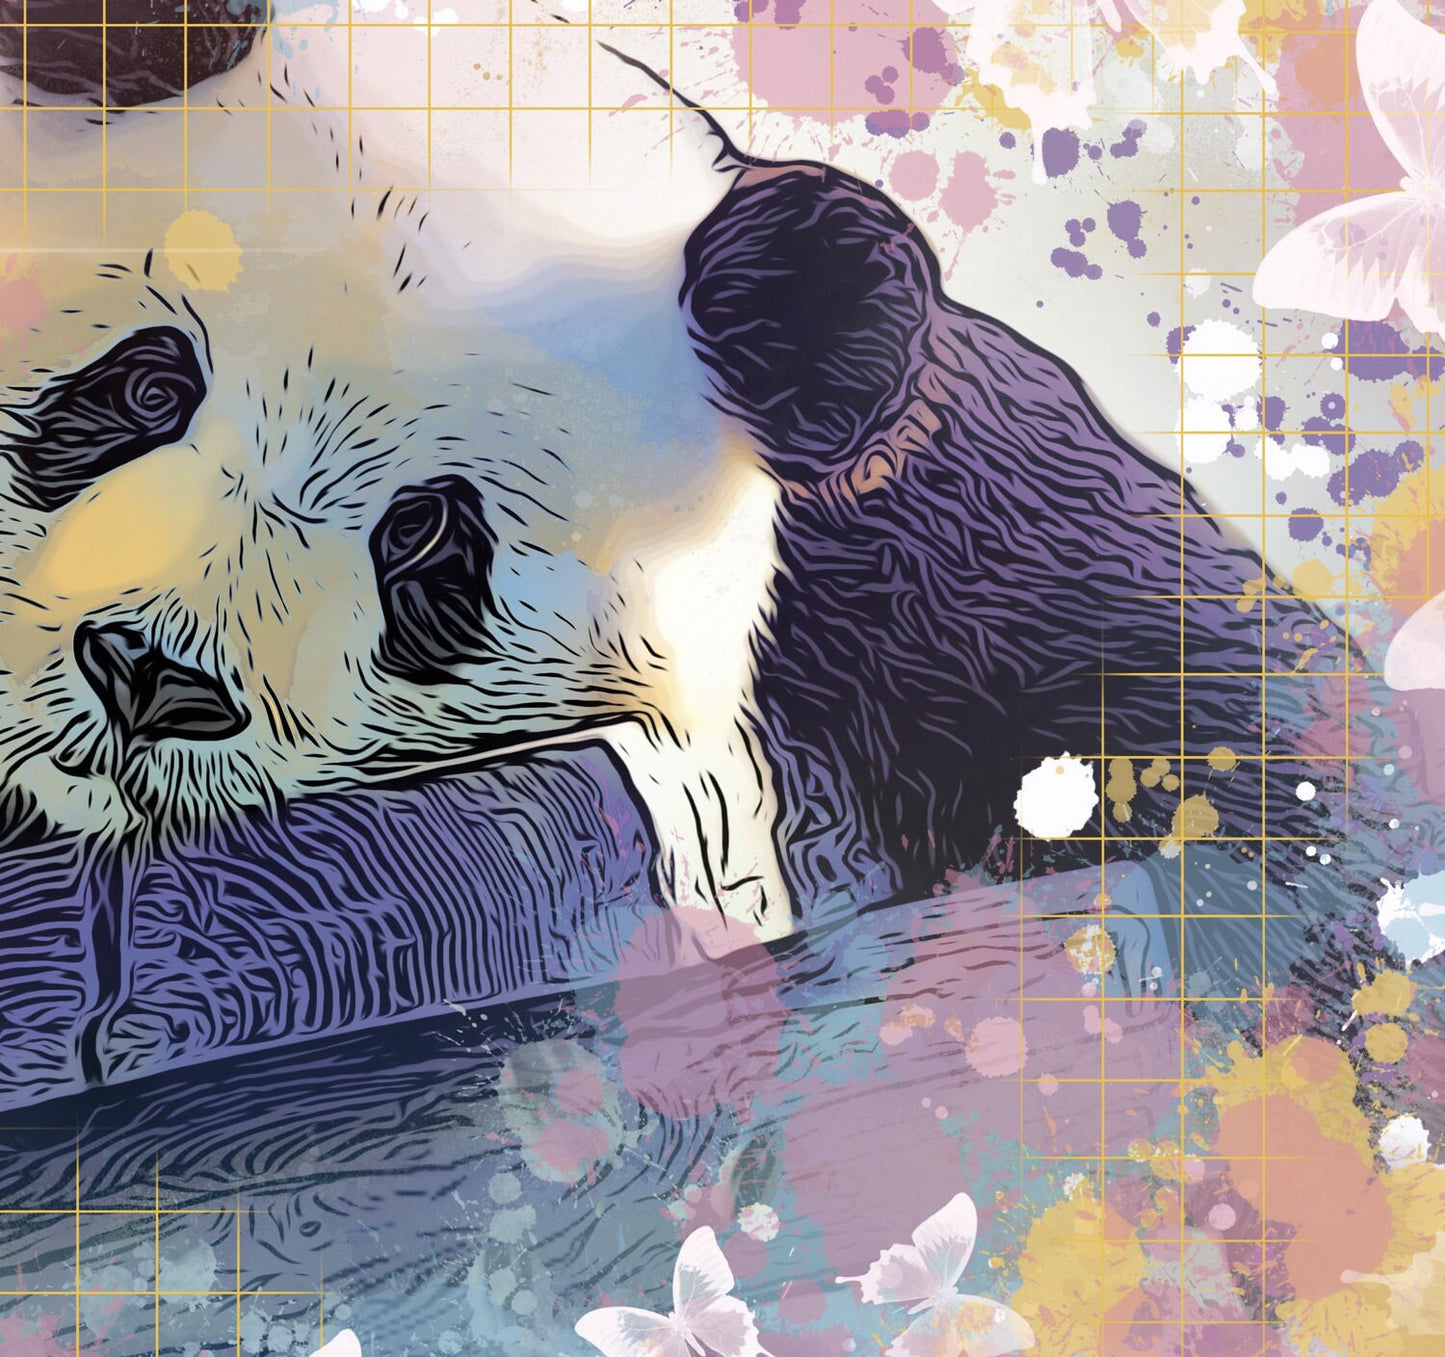 Panda Bear Art - Panda Gifts. Colorful Panda Wall Art on CANVAS or PAPER *Each Print Hand Signed*